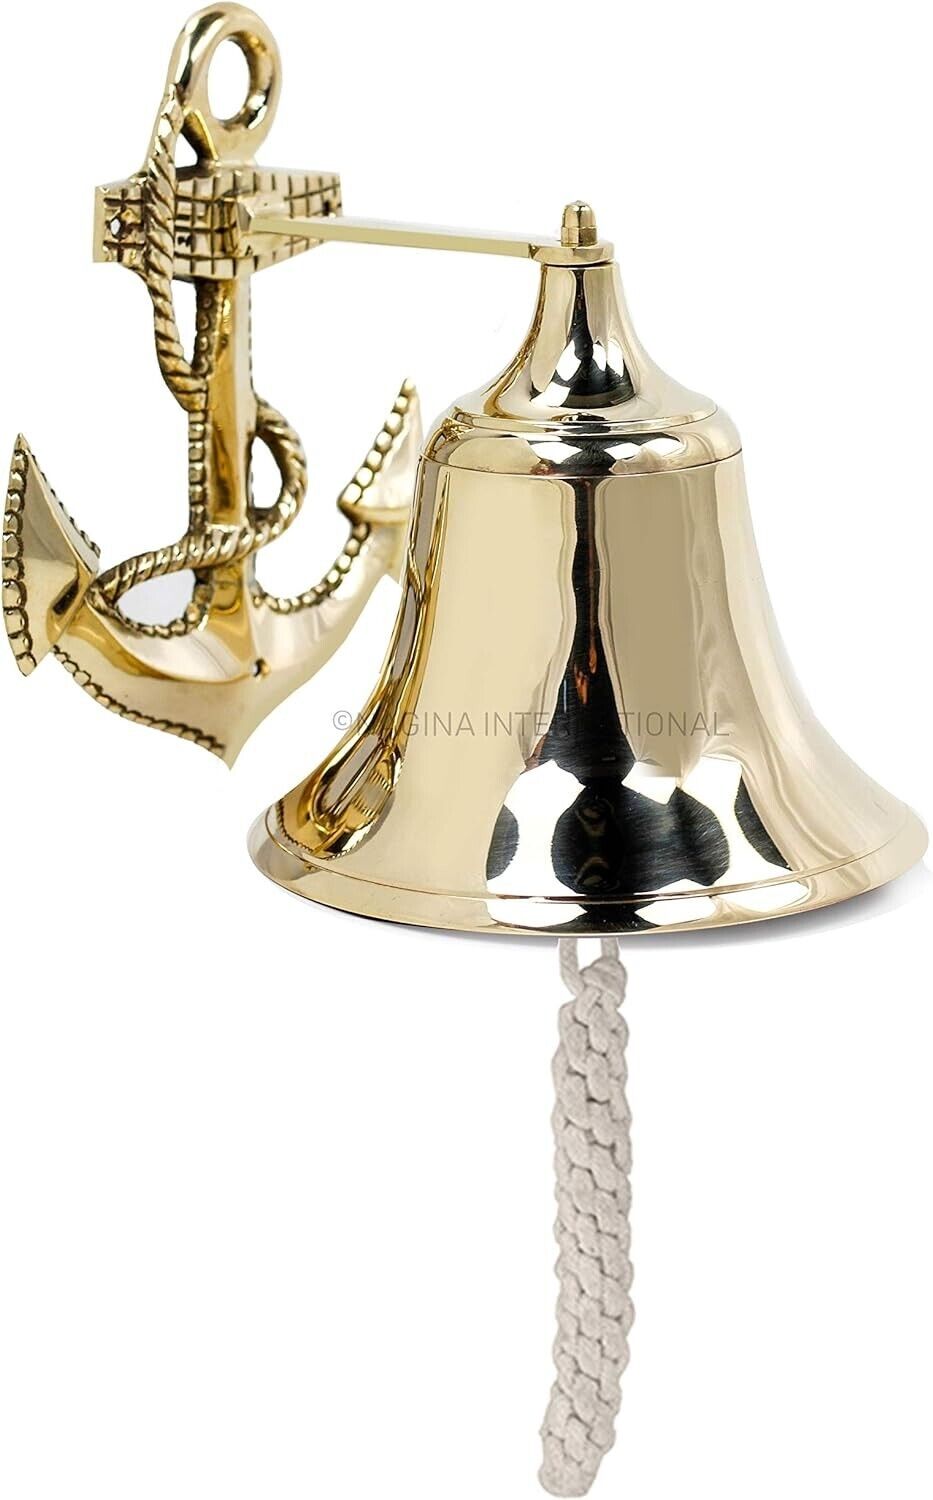 Maritime Ocean Premium Brass Polished Hanging Anchor Ship Metal Bell Home Decor